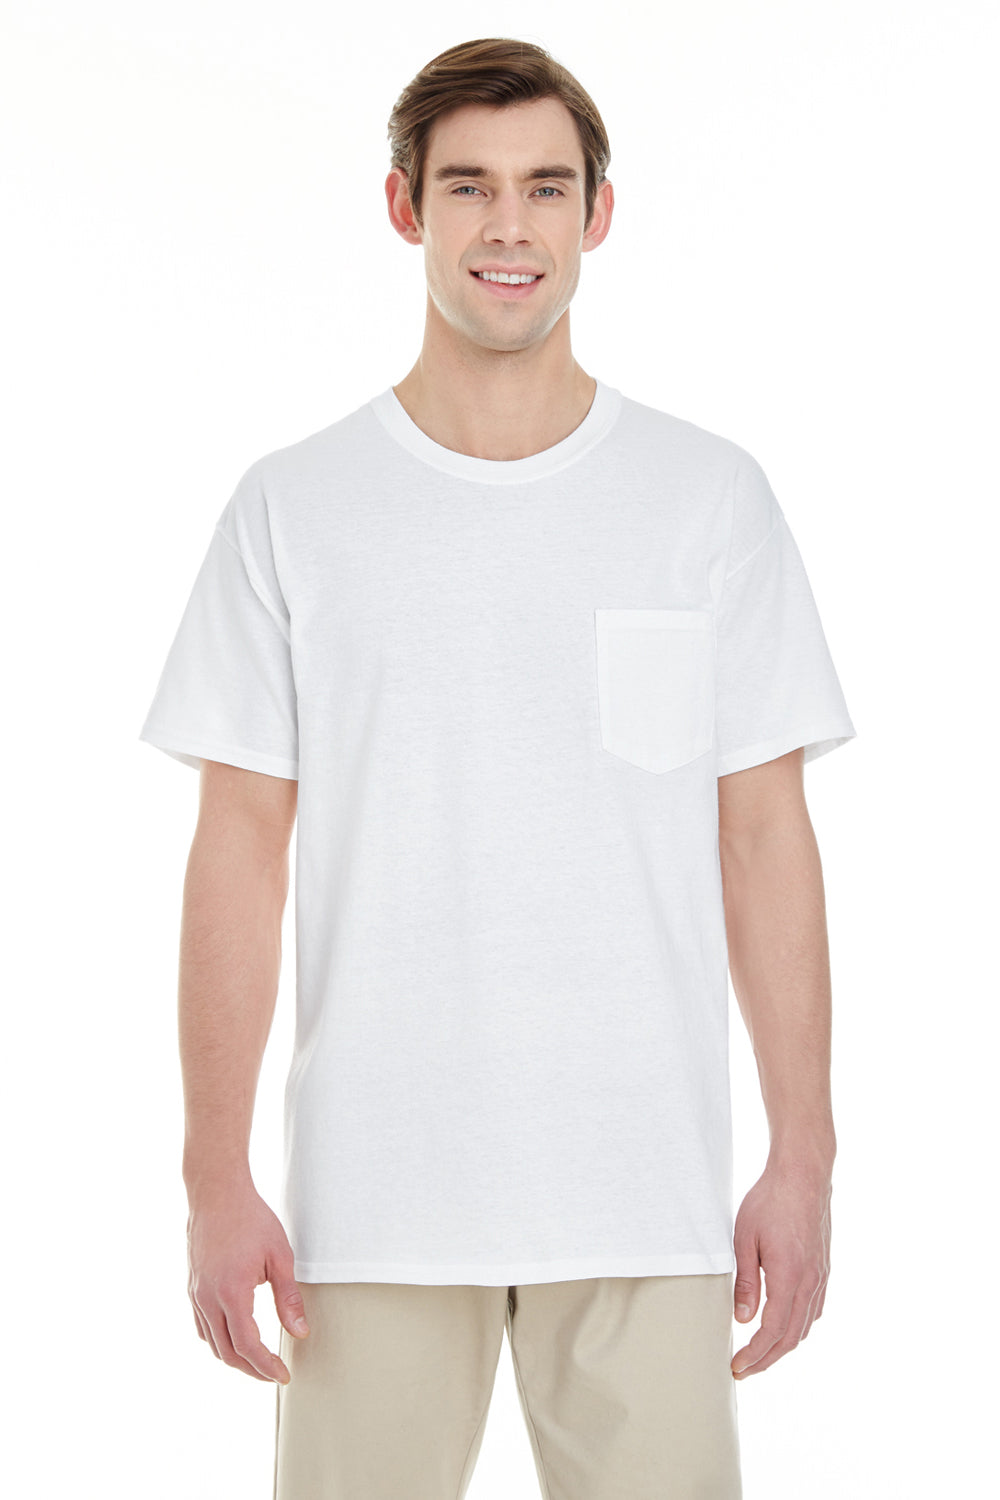 Gildan G530 Mens Short Sleeve Crewneck T-Shirt w/ Pocket White Front